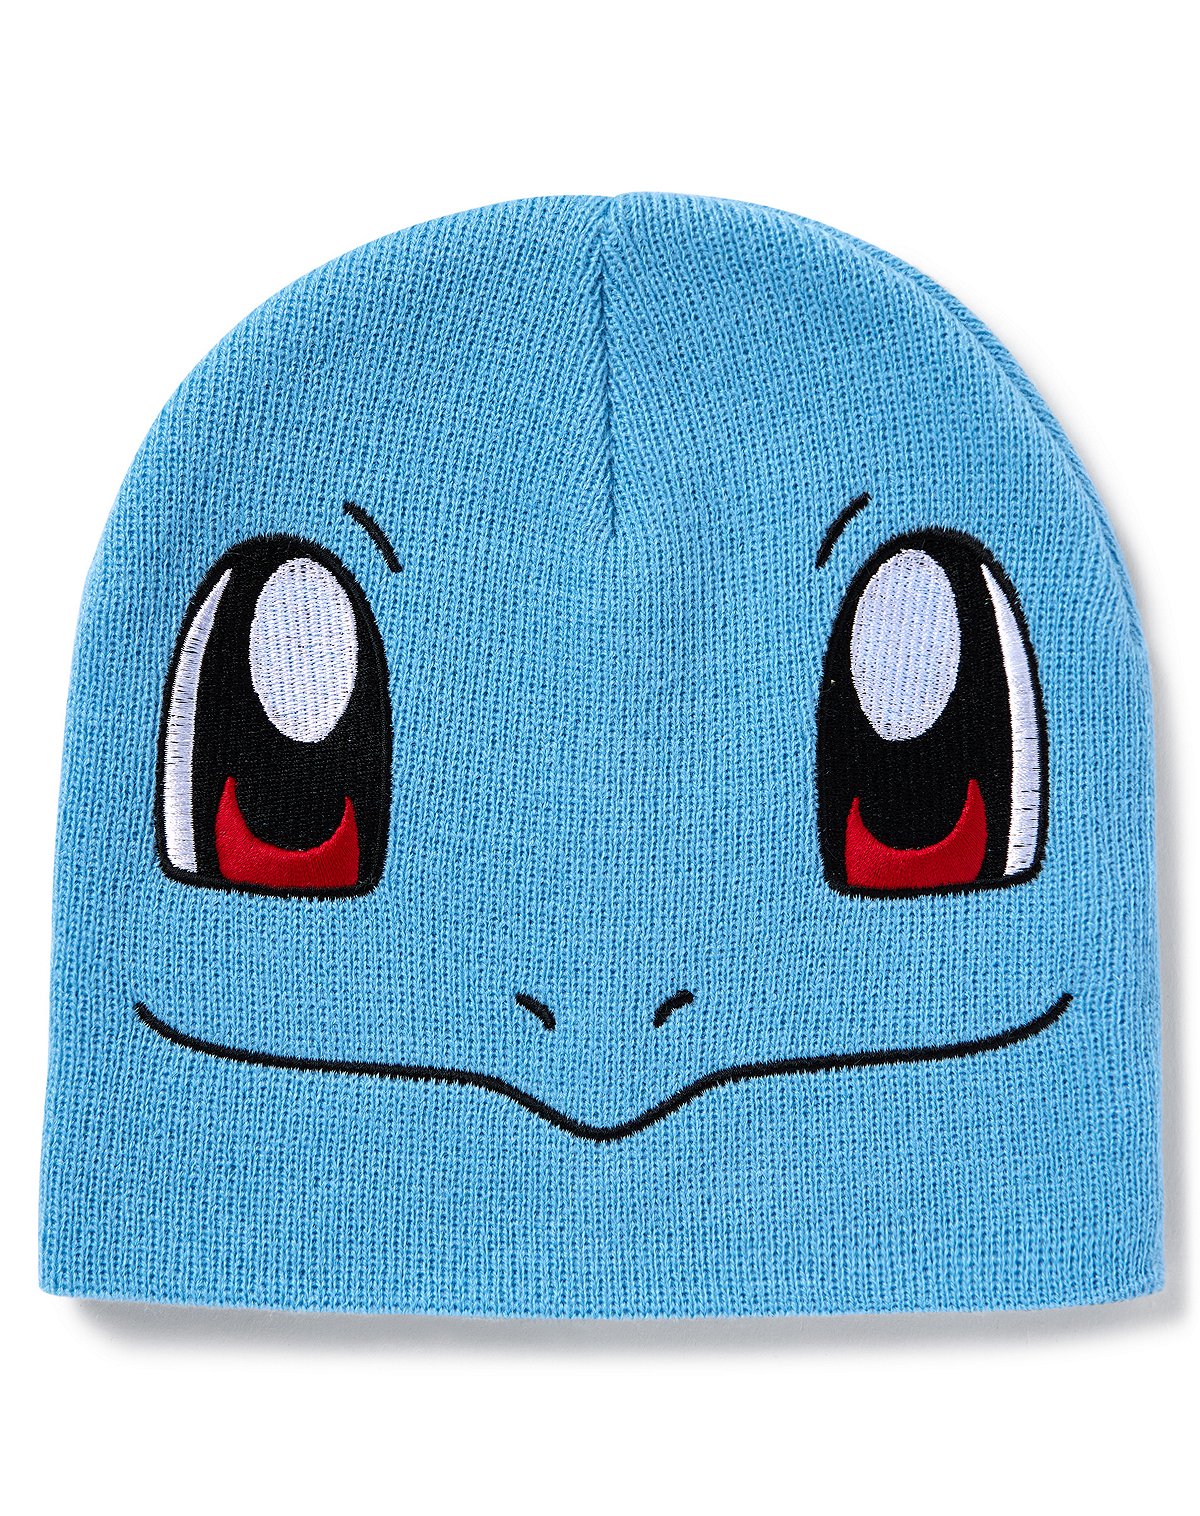 Squirtle Face Beanie Hat - Pokémon